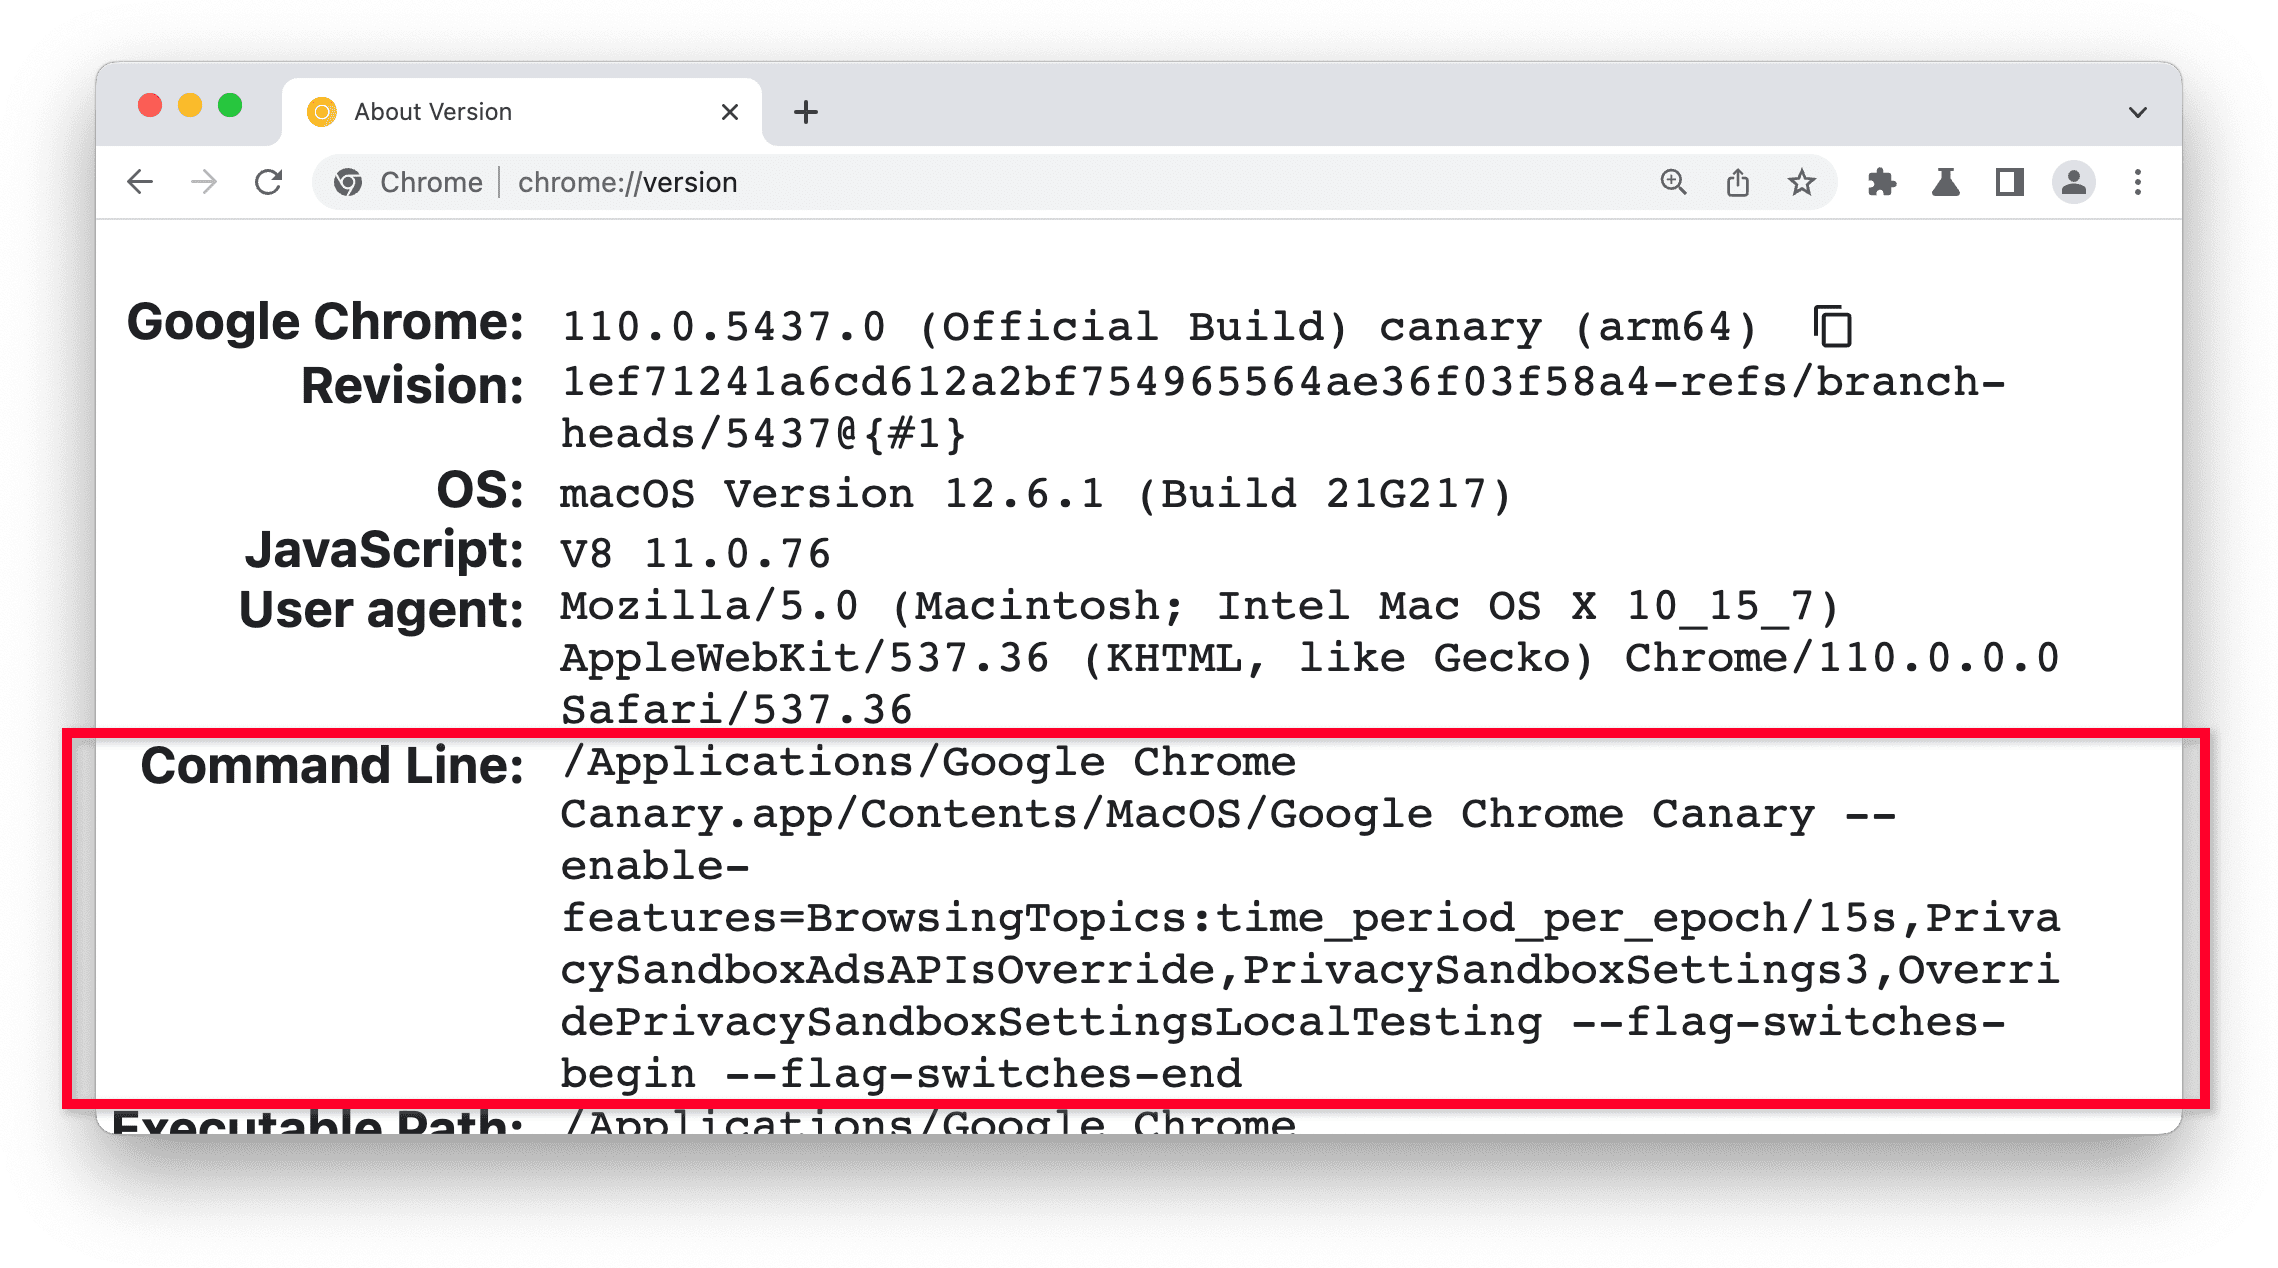 chrome://version-pagina in Chrome Canary, opdrachtregelgedeelte gemarkeerd.